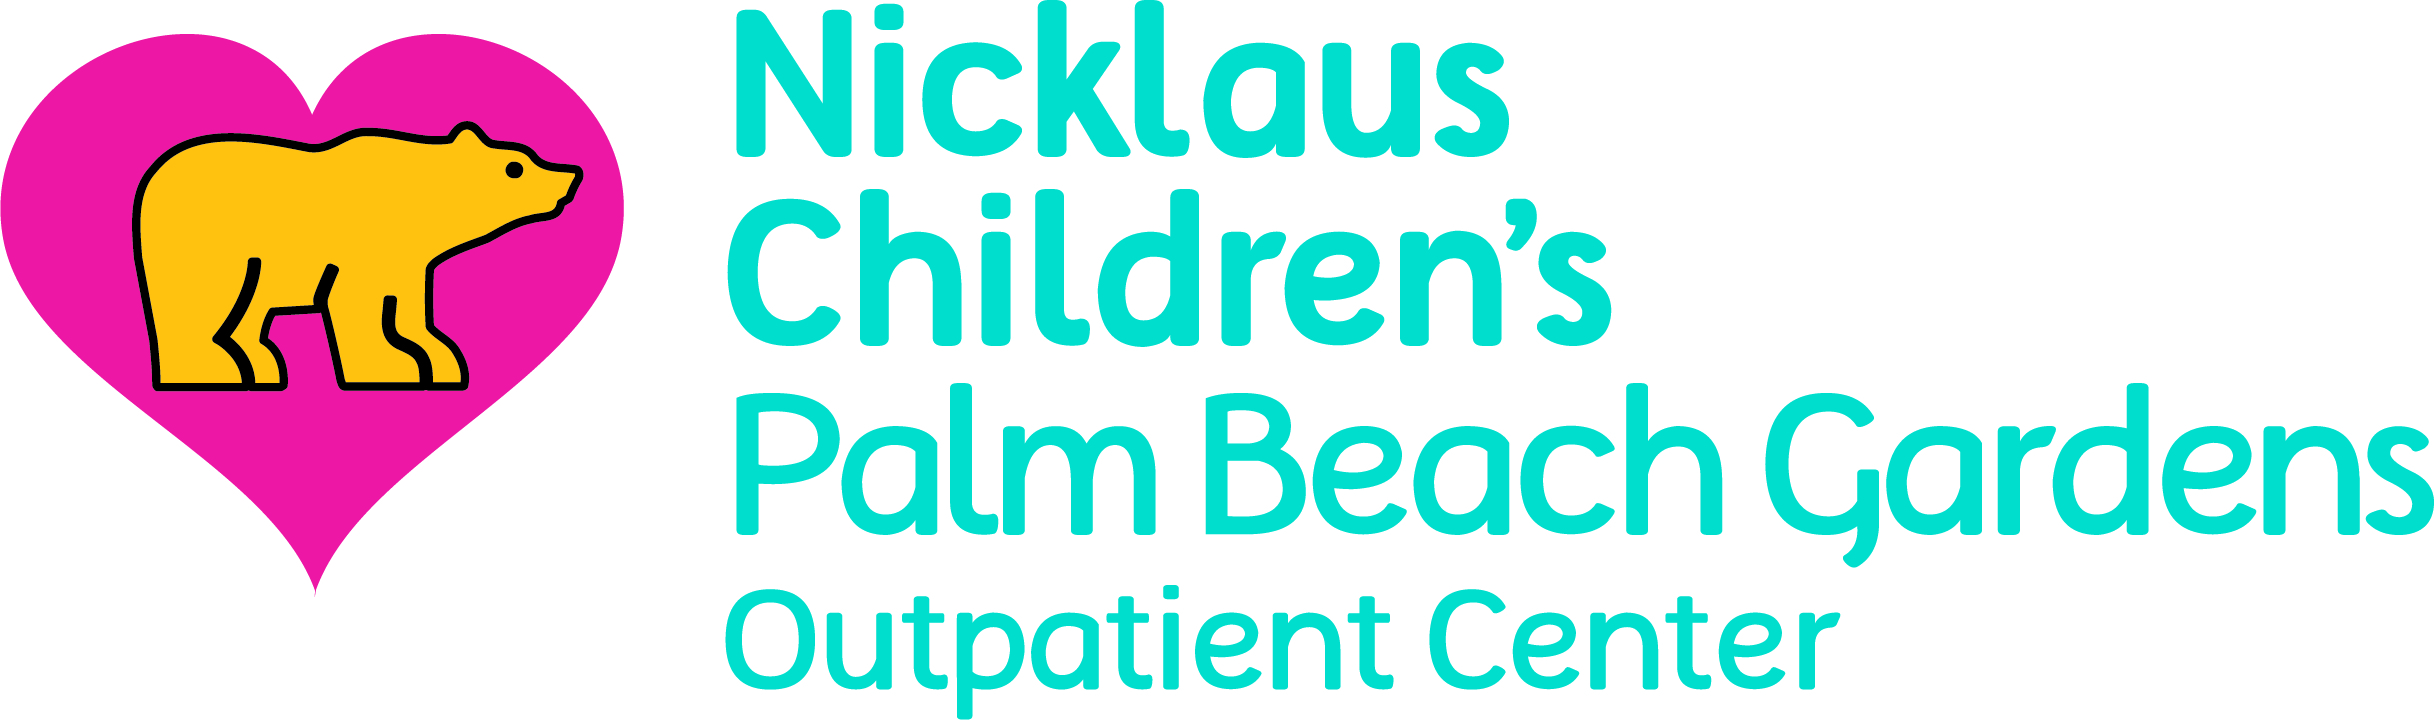 Nicklaus Children's Hospital Outpatient Center